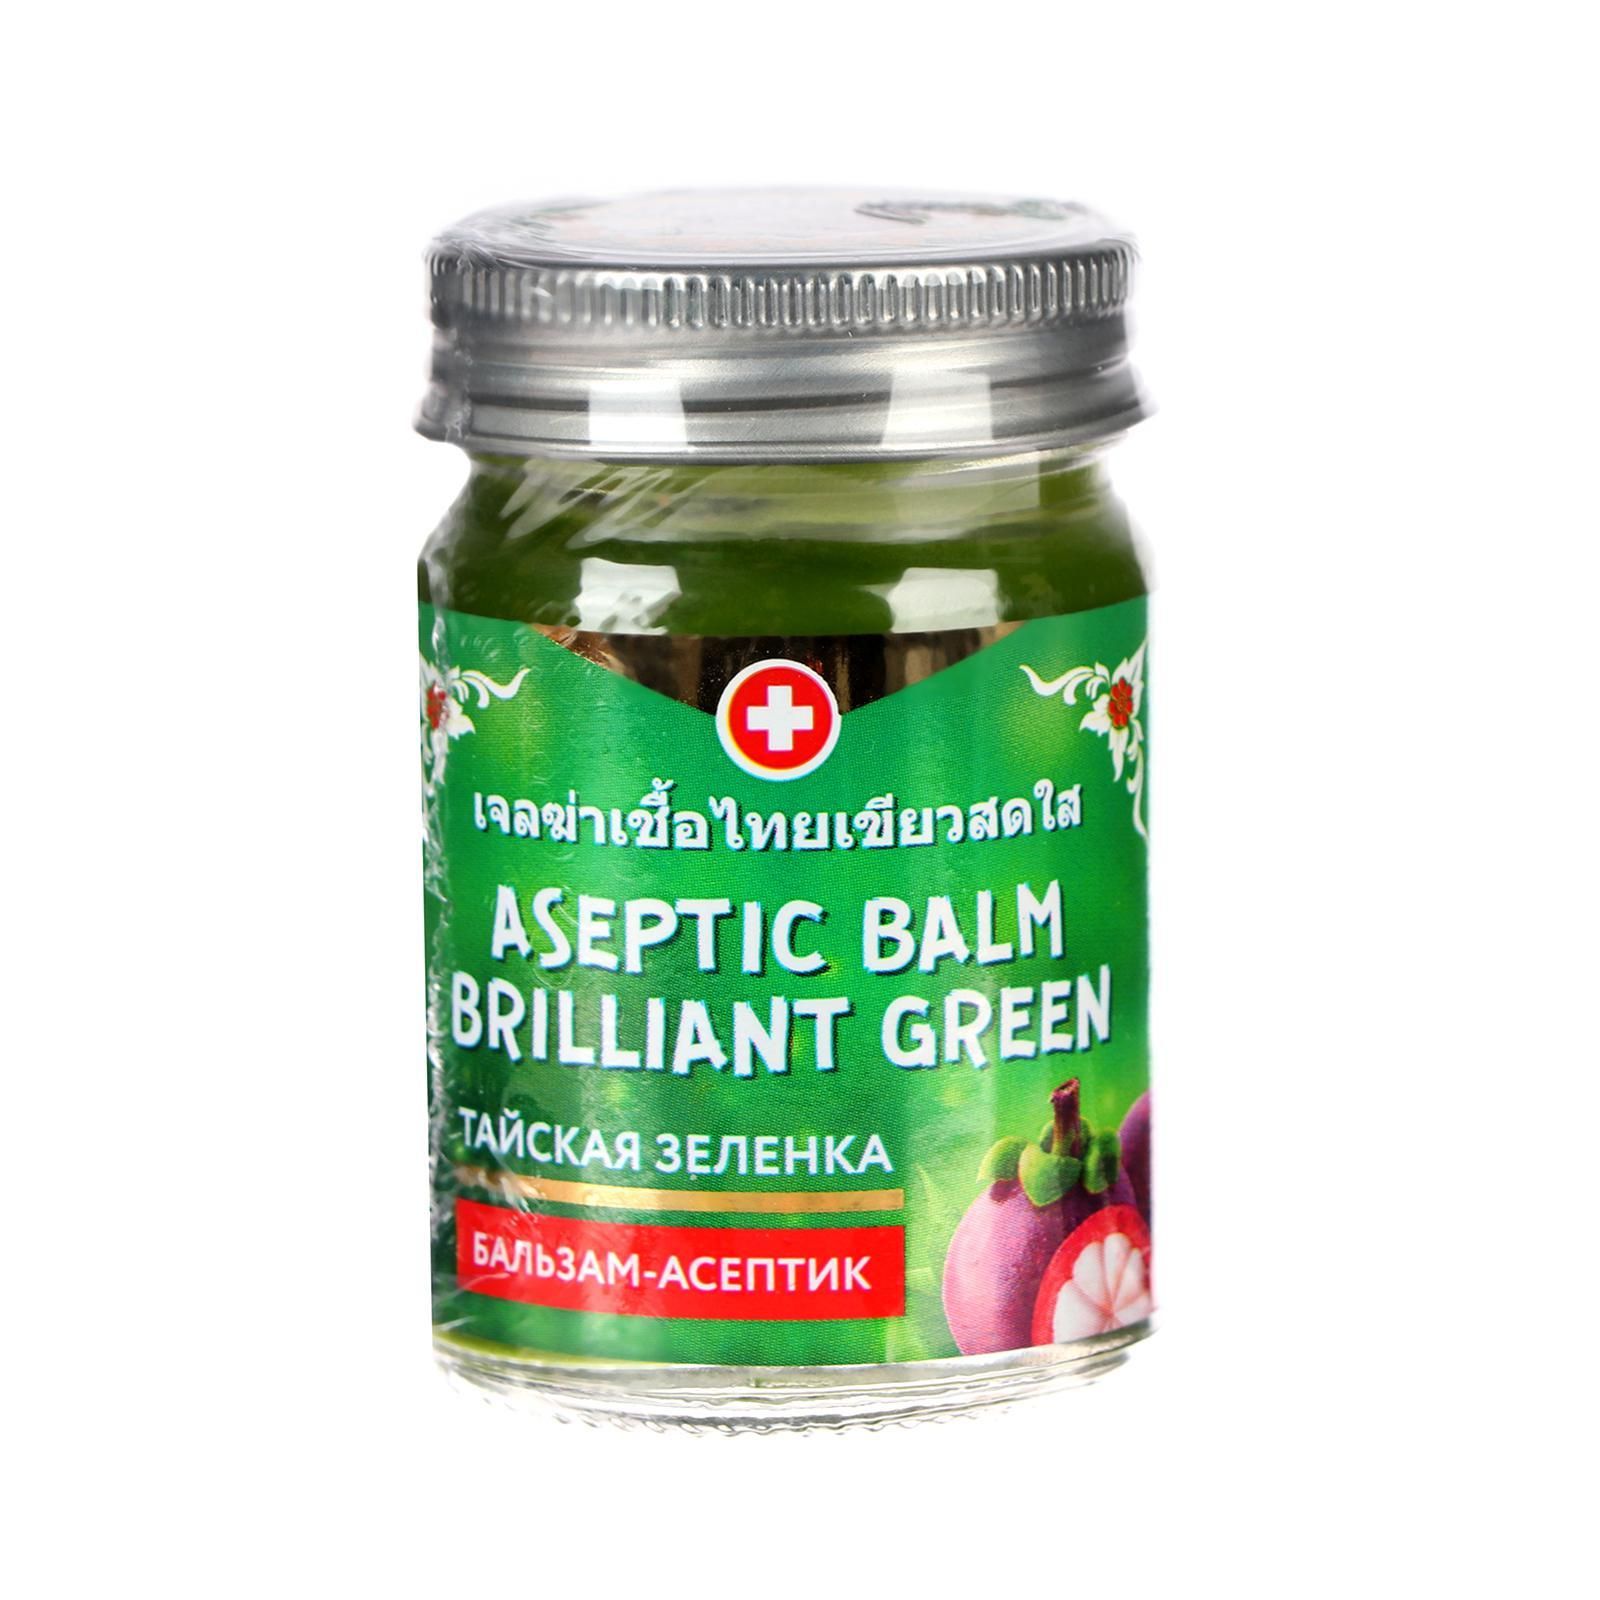 Бальзам-асептик тайская зеленка Binturong Aseptic Balm Brilliant Green, 50 г